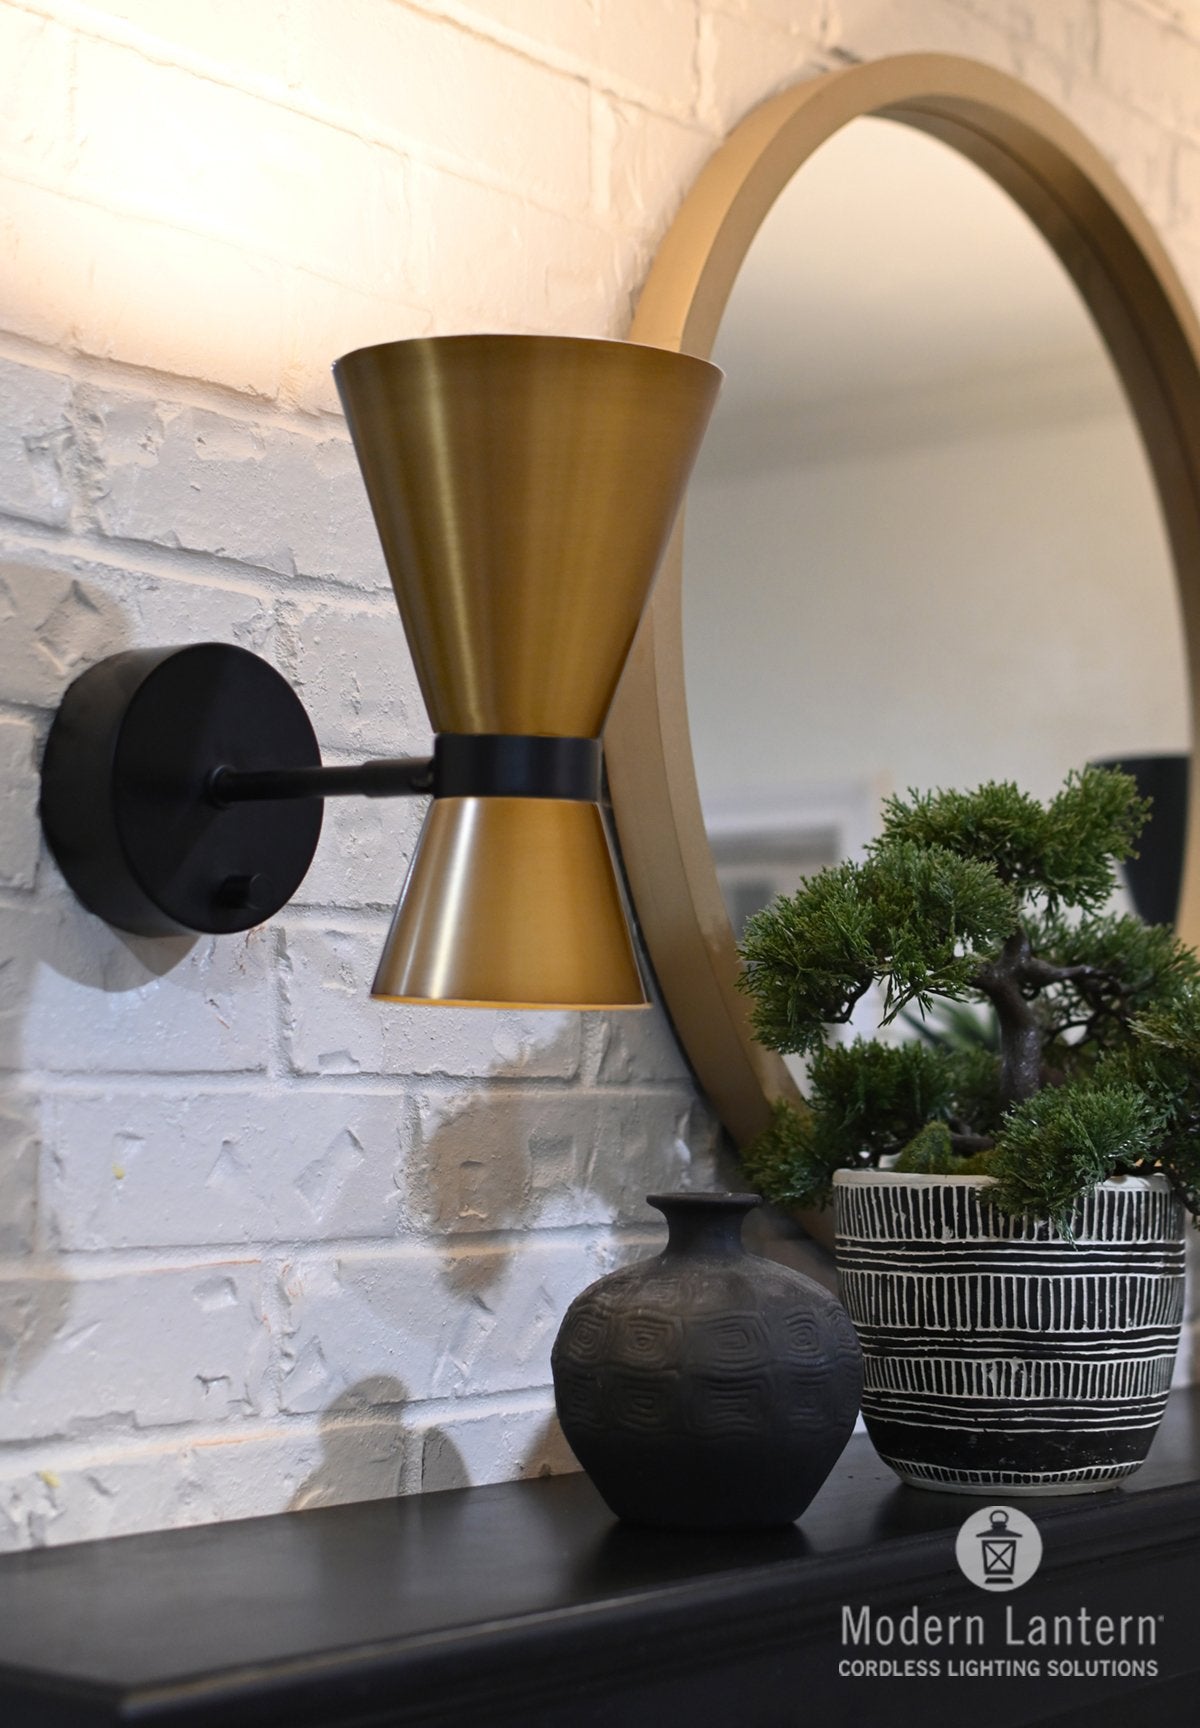 2 Modern Lantern Cordless Lamp Emerson Wall Sconce Black Antique Brass Metal Shade